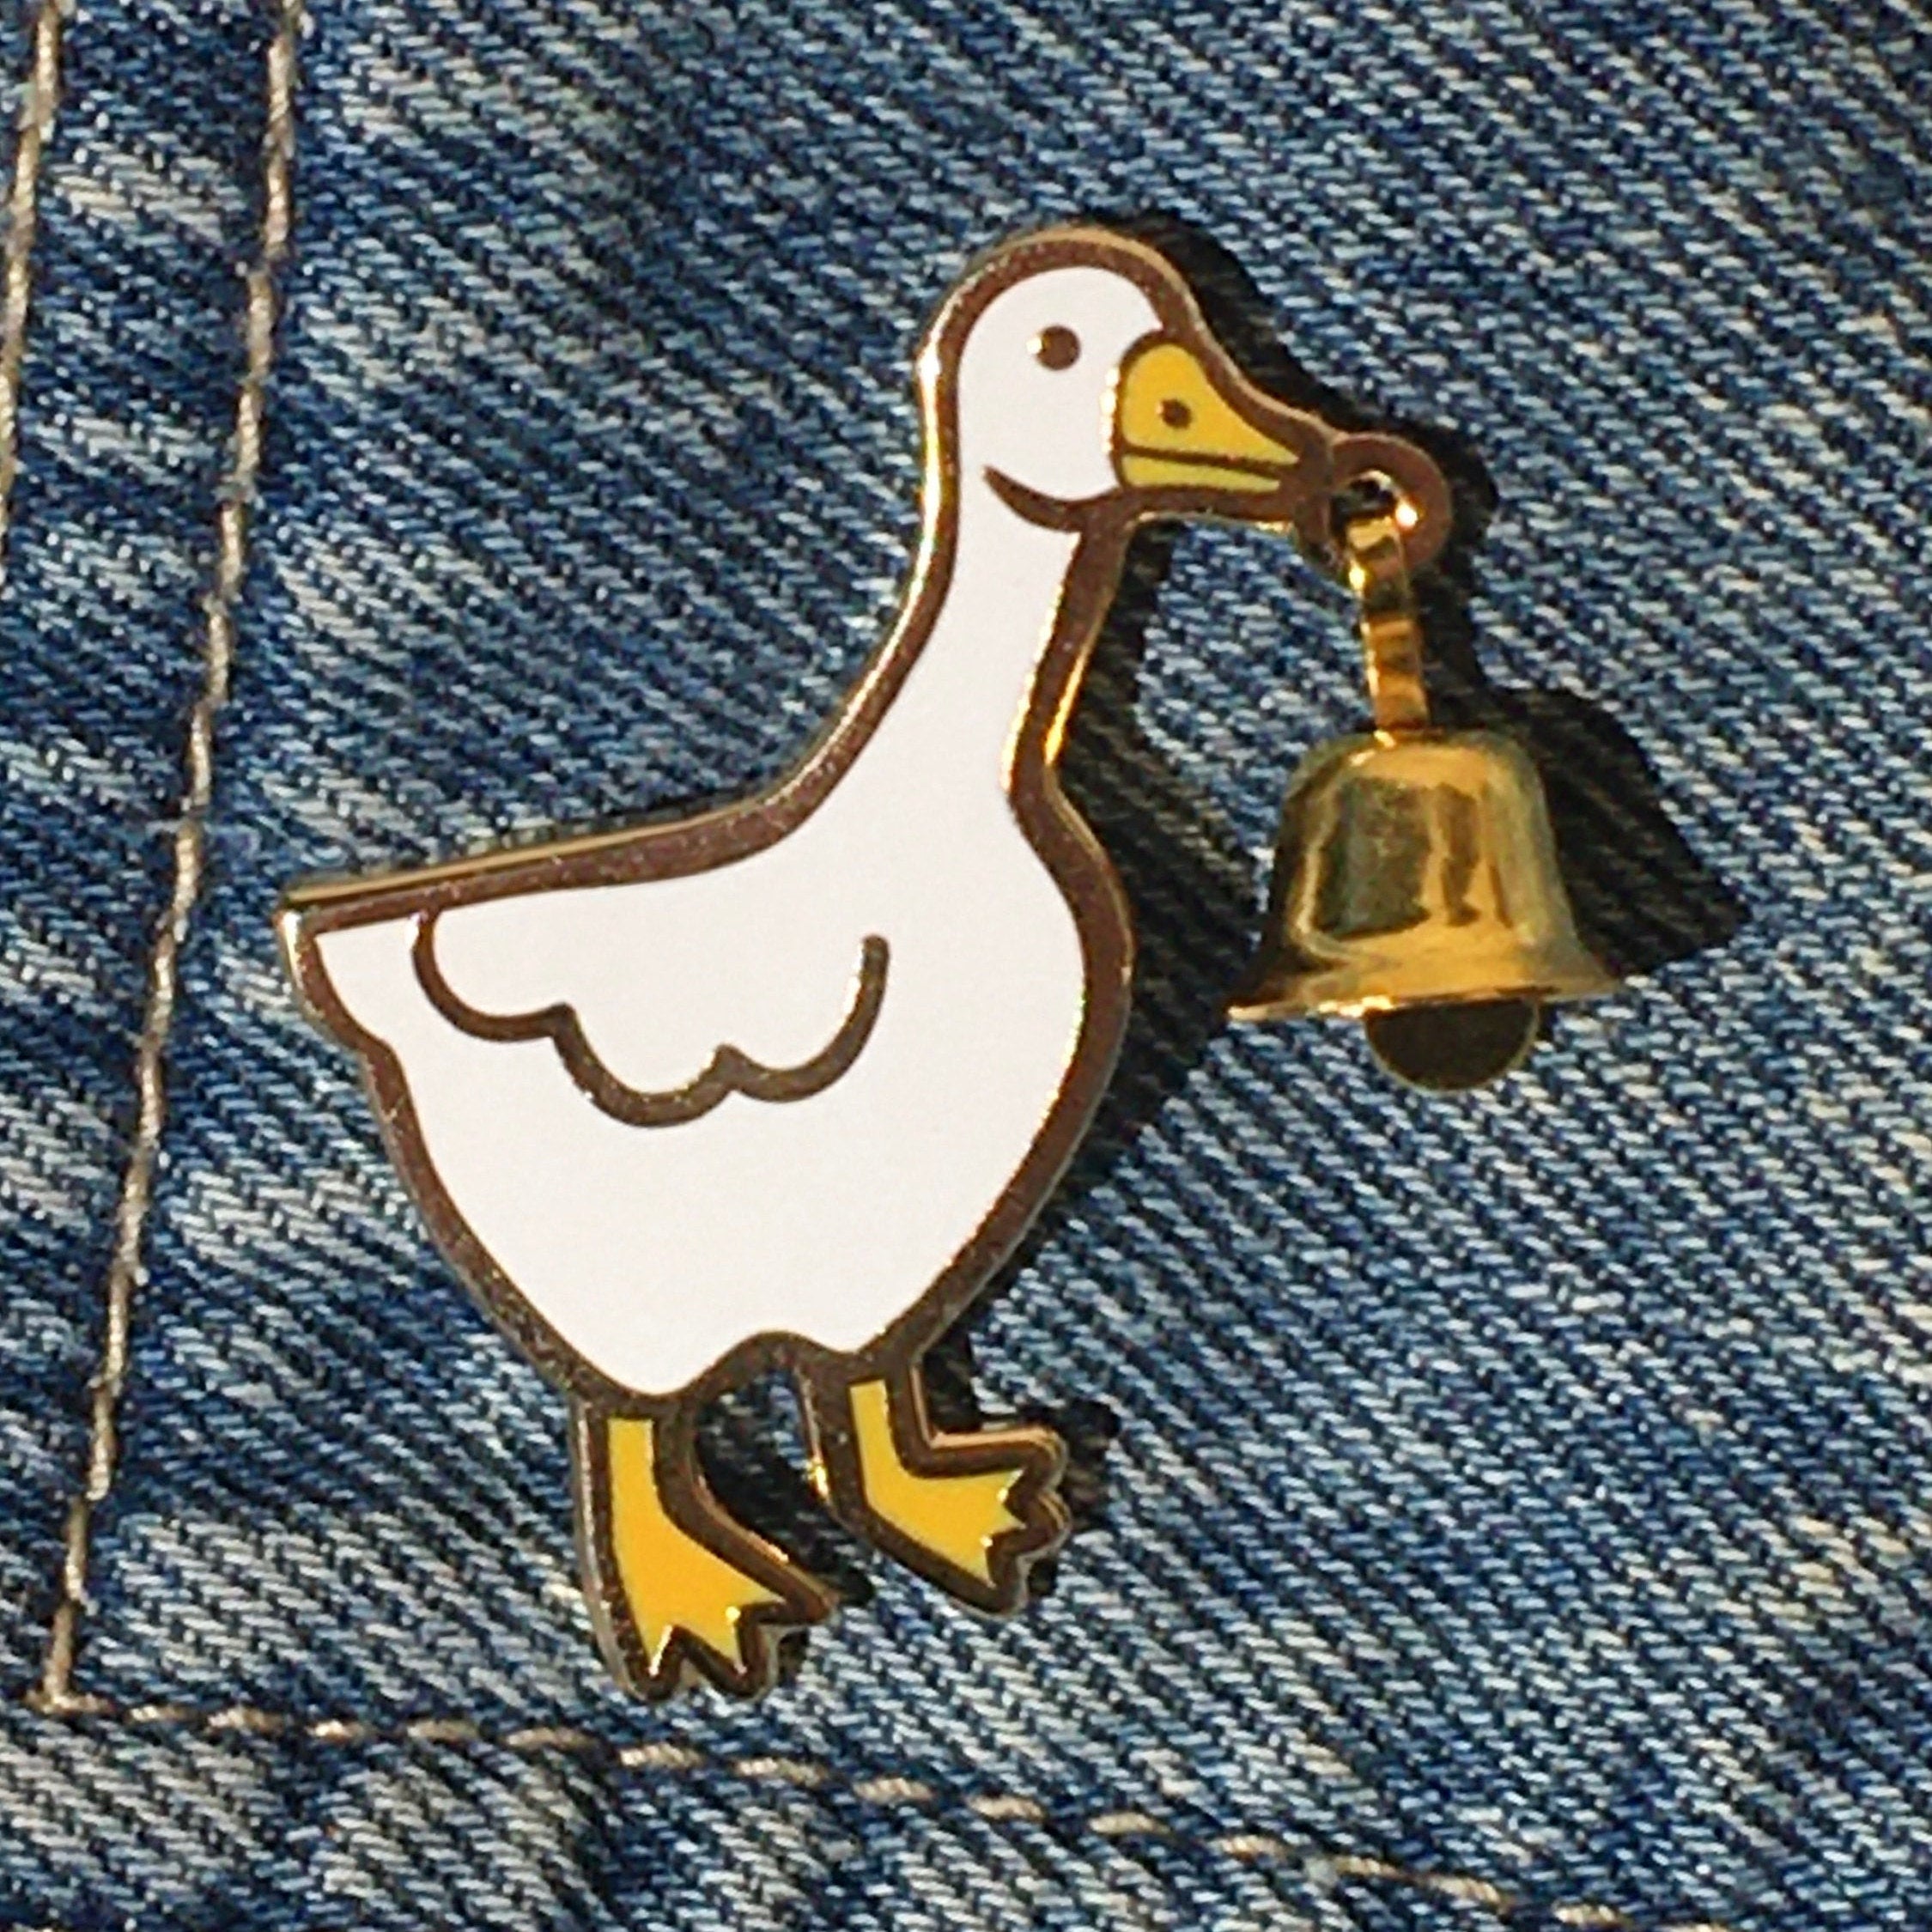 Horrible Goose Hard Enamel Pin with Bell or Charm - Rake, Glasses, Keys, Heart, Soccer Ball, Teapot, and More - Lapel Pin Cloisonné Badge